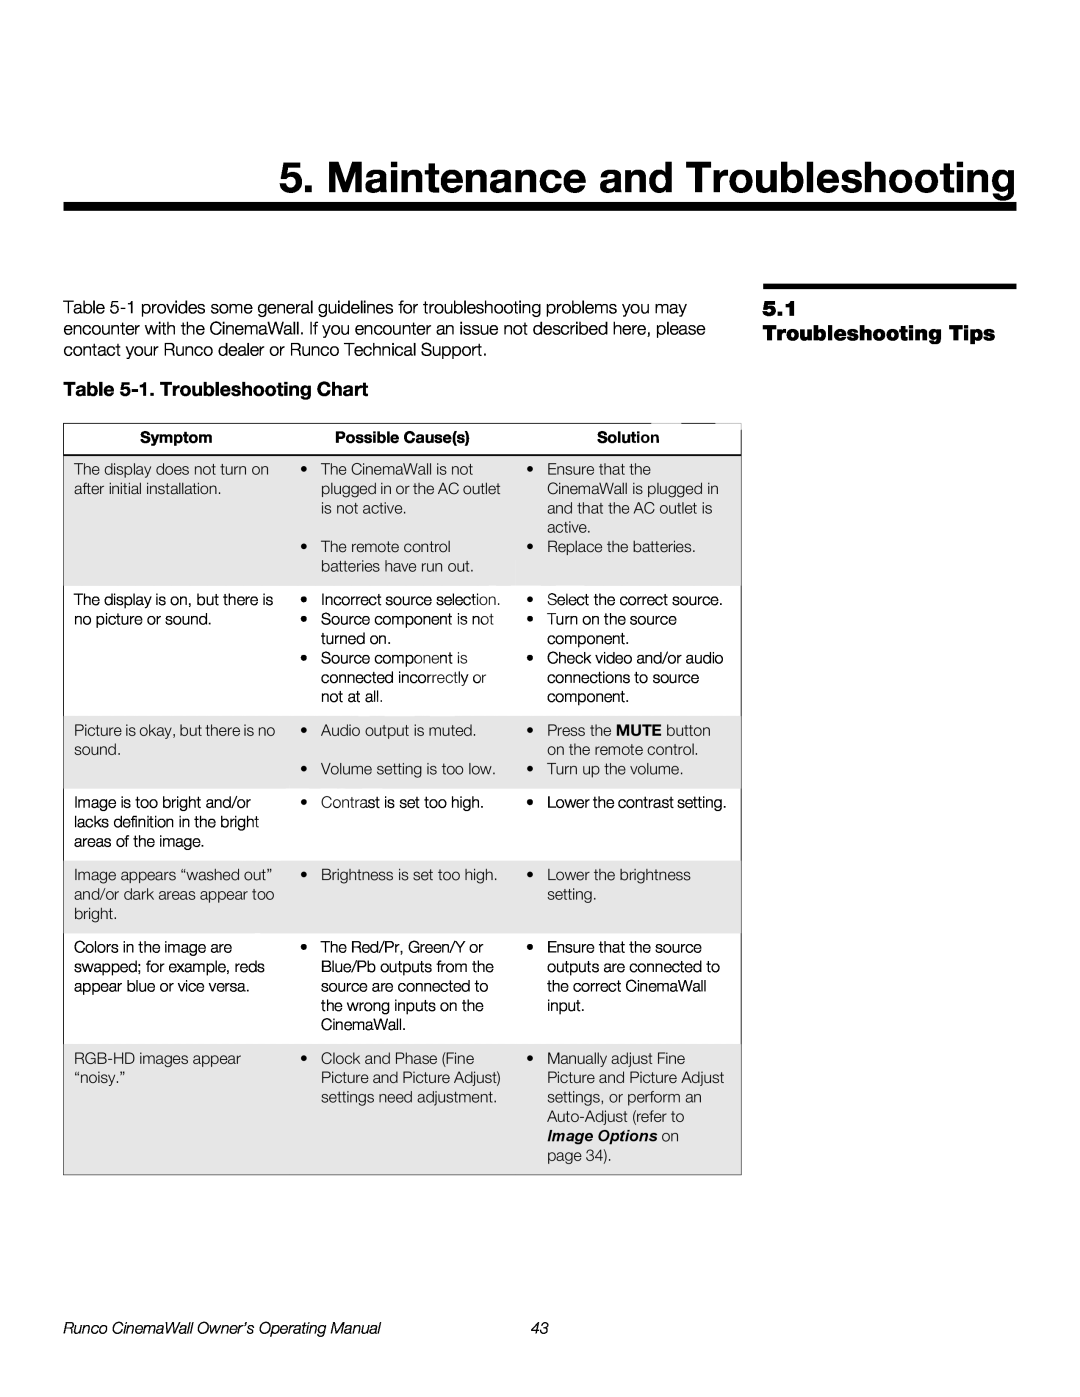 Runco CW-42HD, CW-50XA Maintenance and Troubleshooting, Troubleshooting Tips, 1. Troubleshooting Chart, Image Options on 